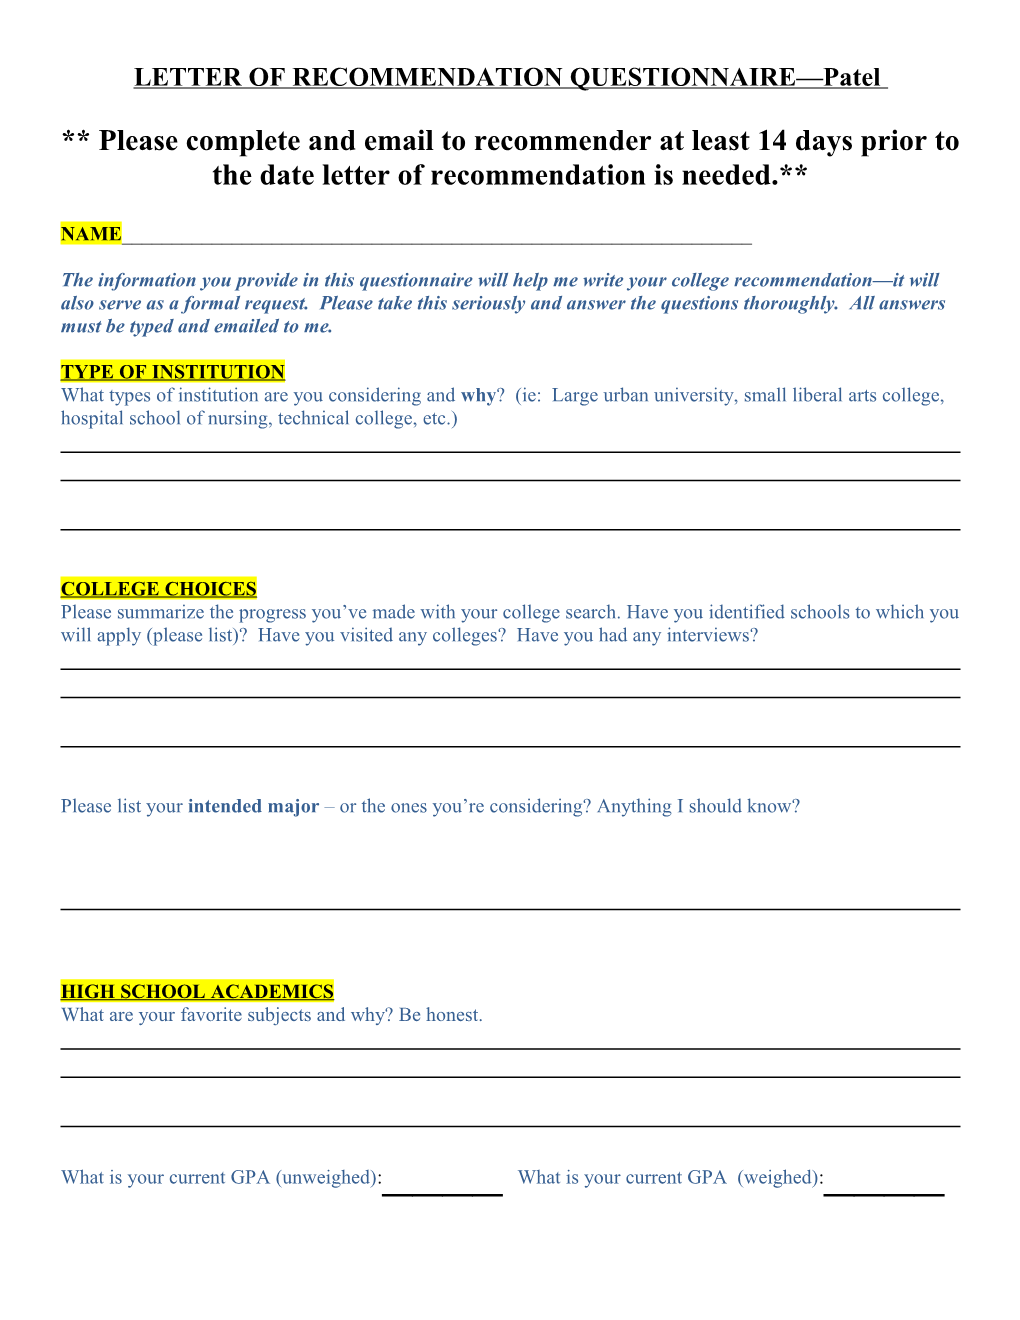 Letter of Recommendation Questionnaire